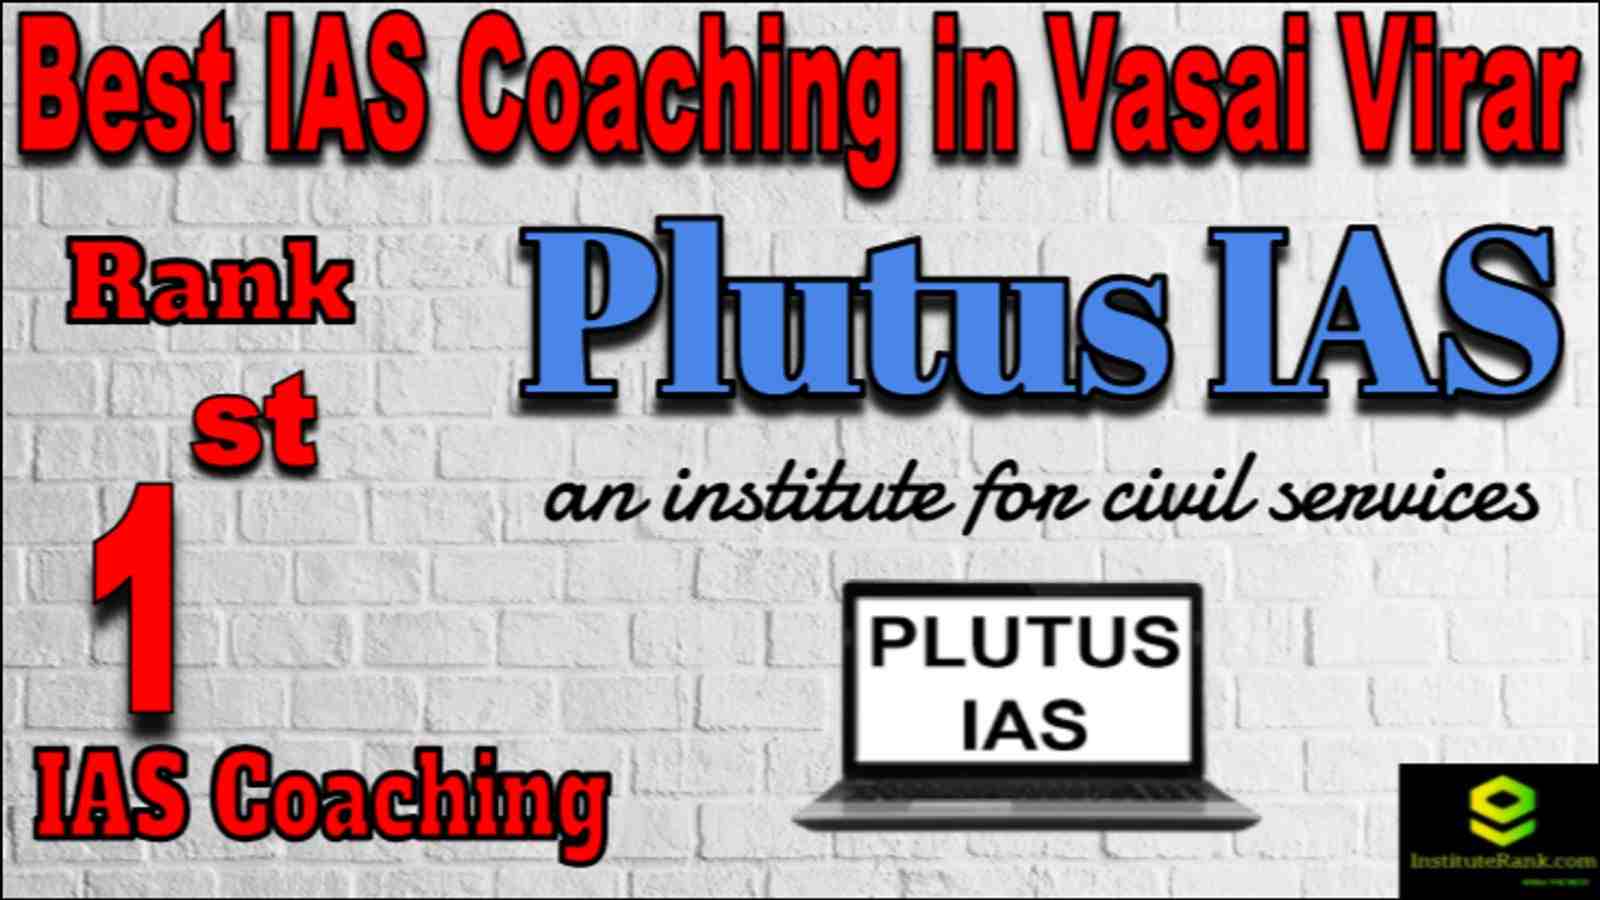 Rank 1 Best IAS coaching in Vasai Virar